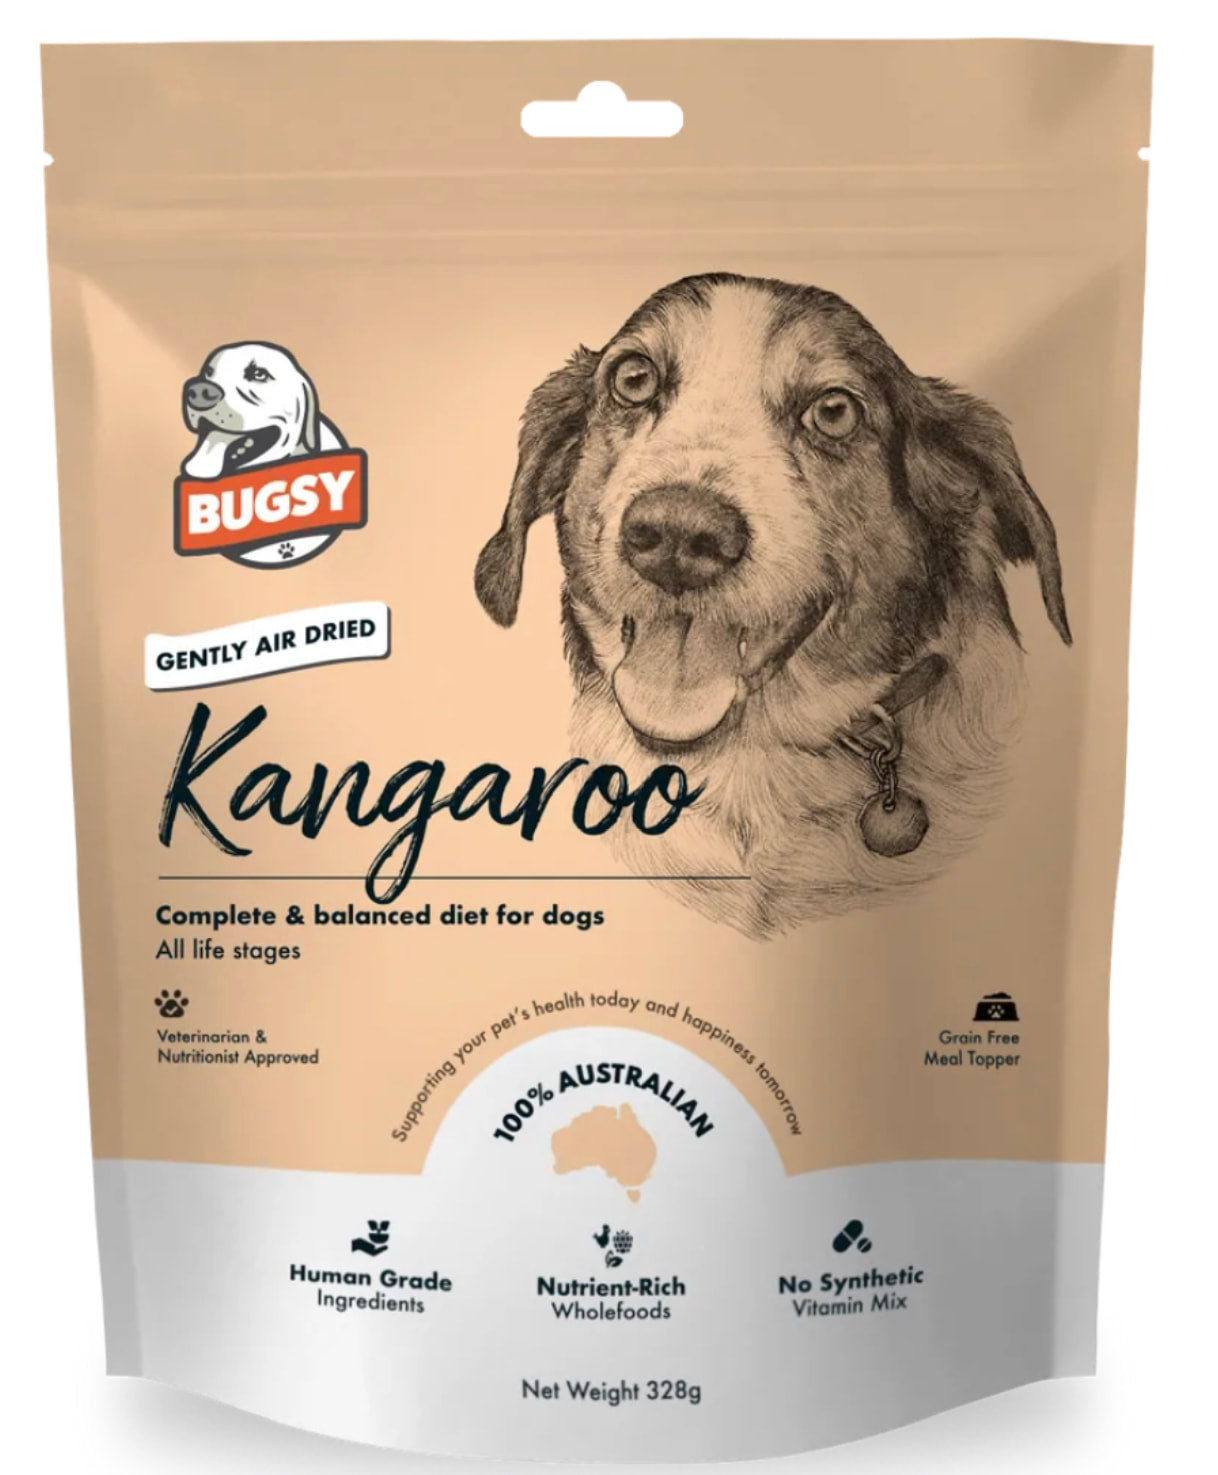 Bugsy's Air Dried Kangaroo For Dogs